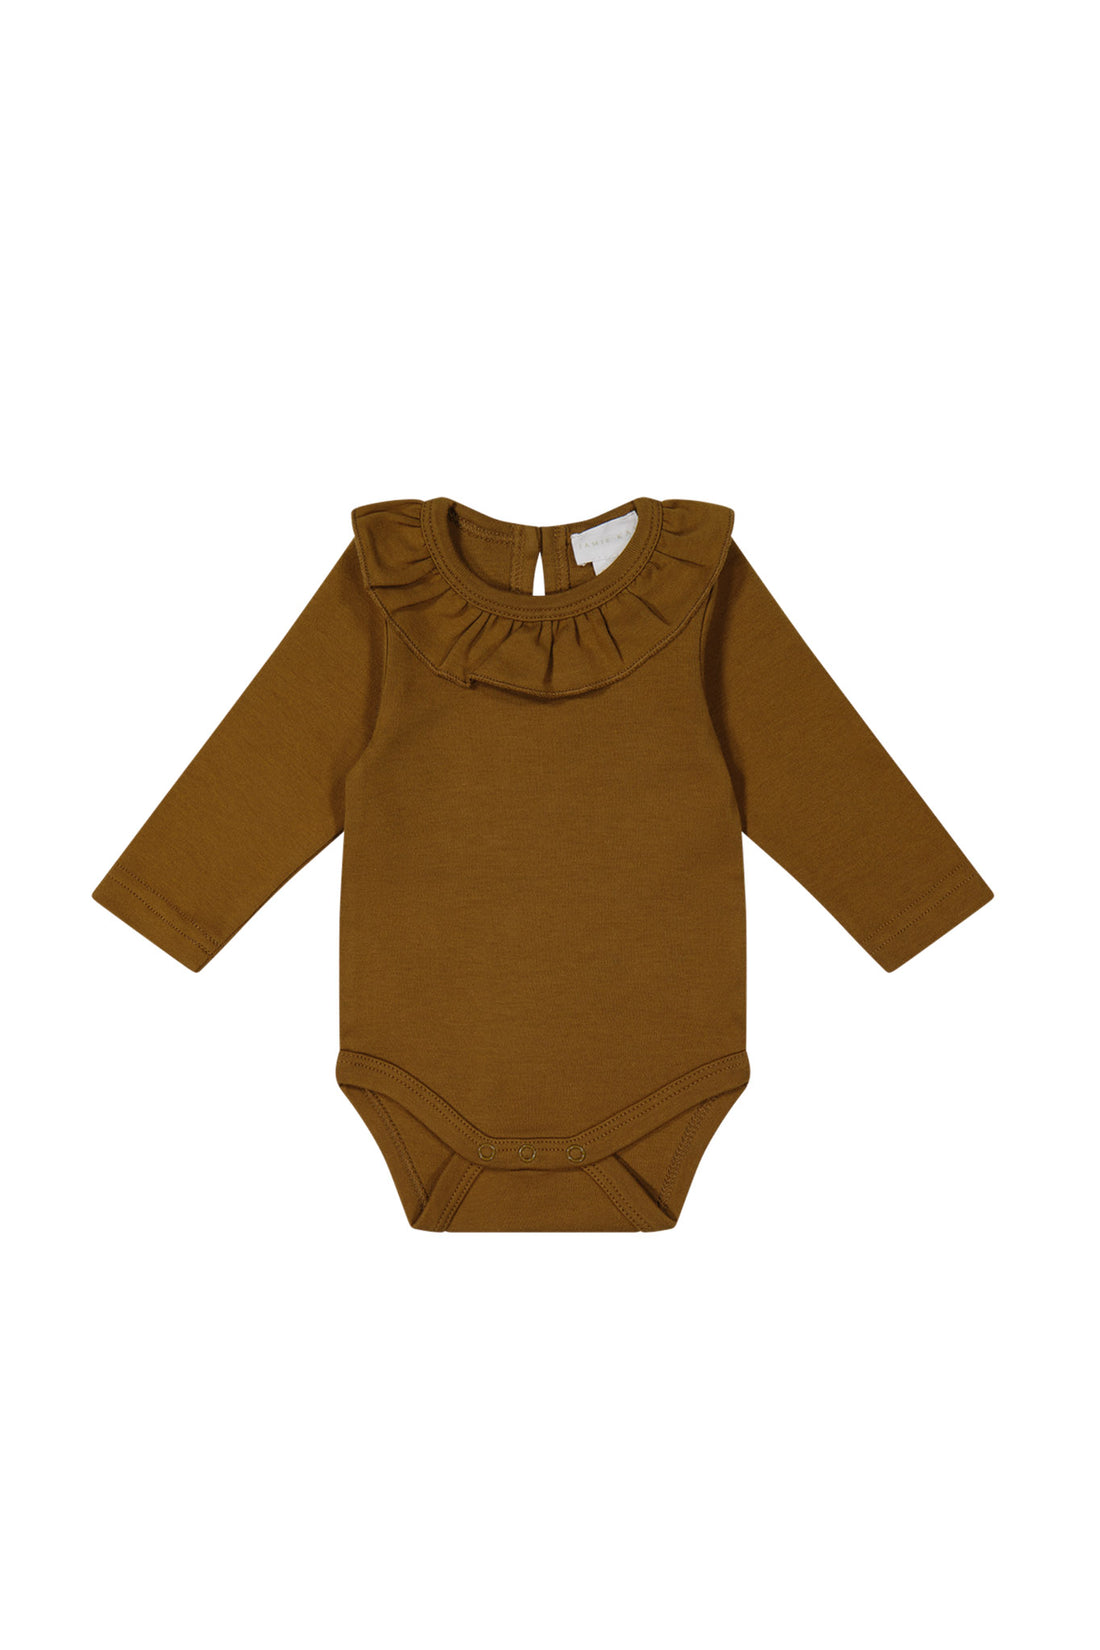 Pima Cotton Fayette Long Sleeve Bodysuit - Autumn Bronze Childrens Bodysuit from Jamie Kay NZ